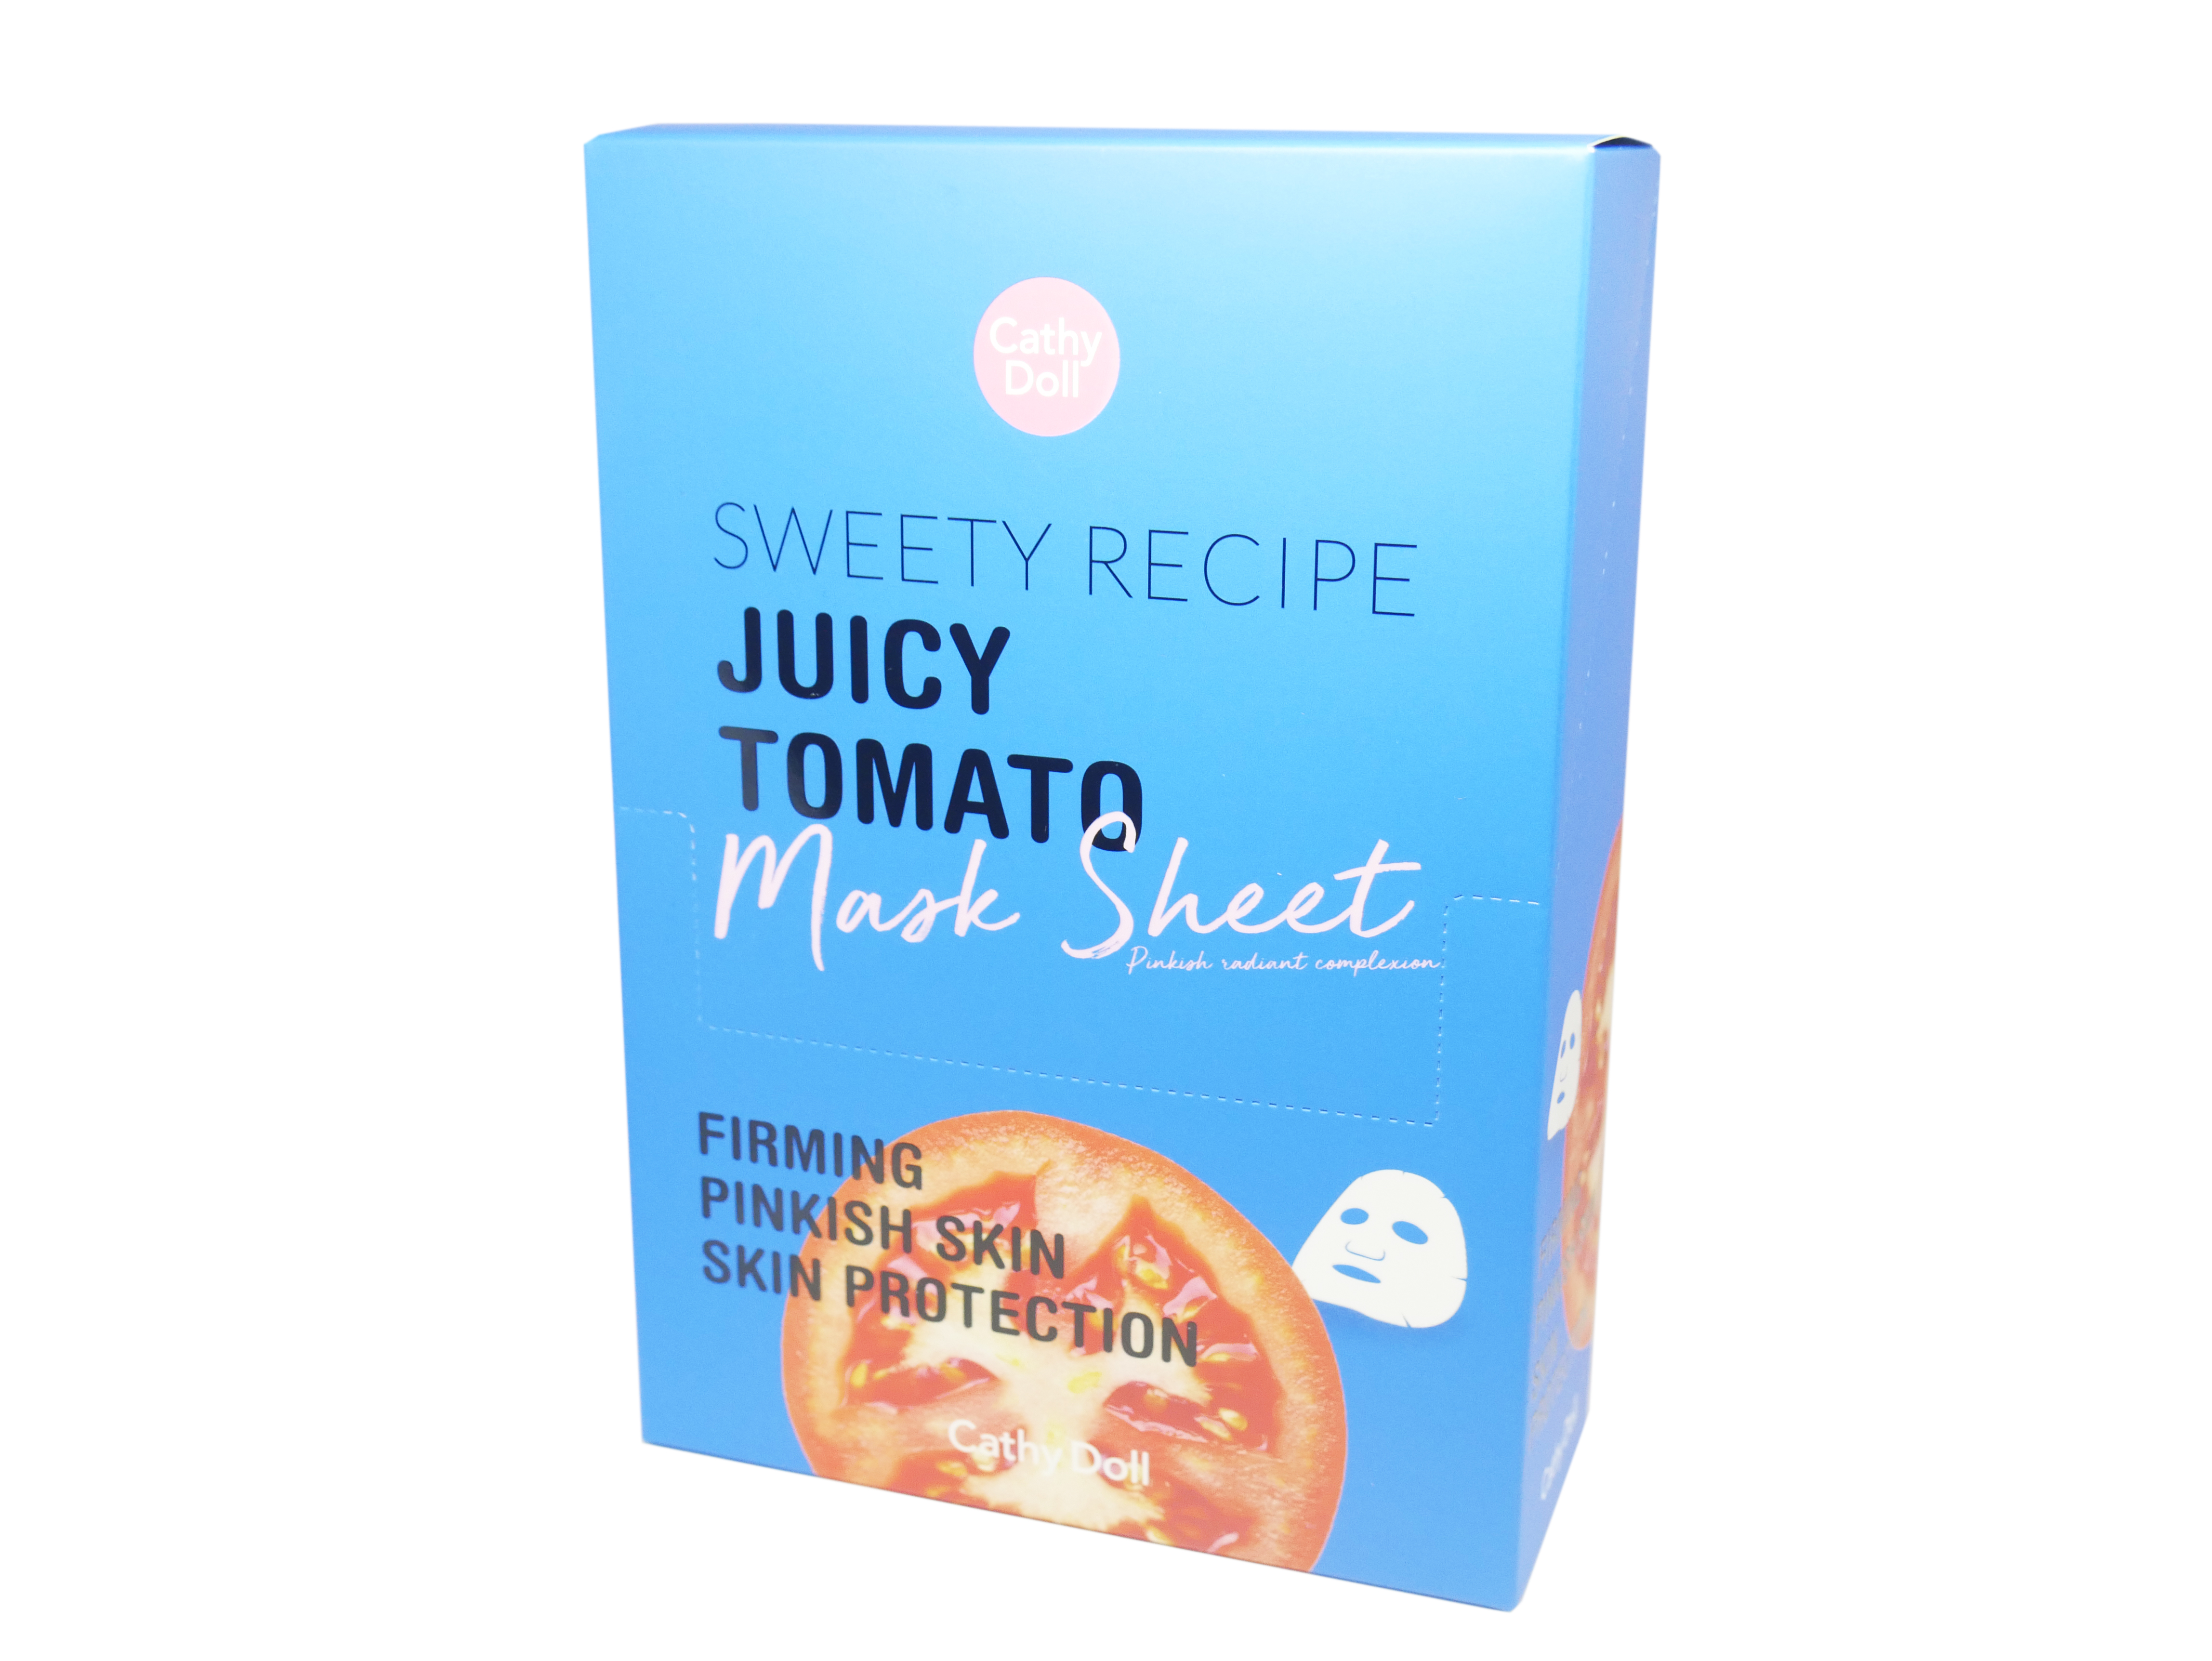 Cathy Doll Sweety Recipe Uicy Tomato Mask Sheet ราคาส่งถูก W.370 รหัส KM180